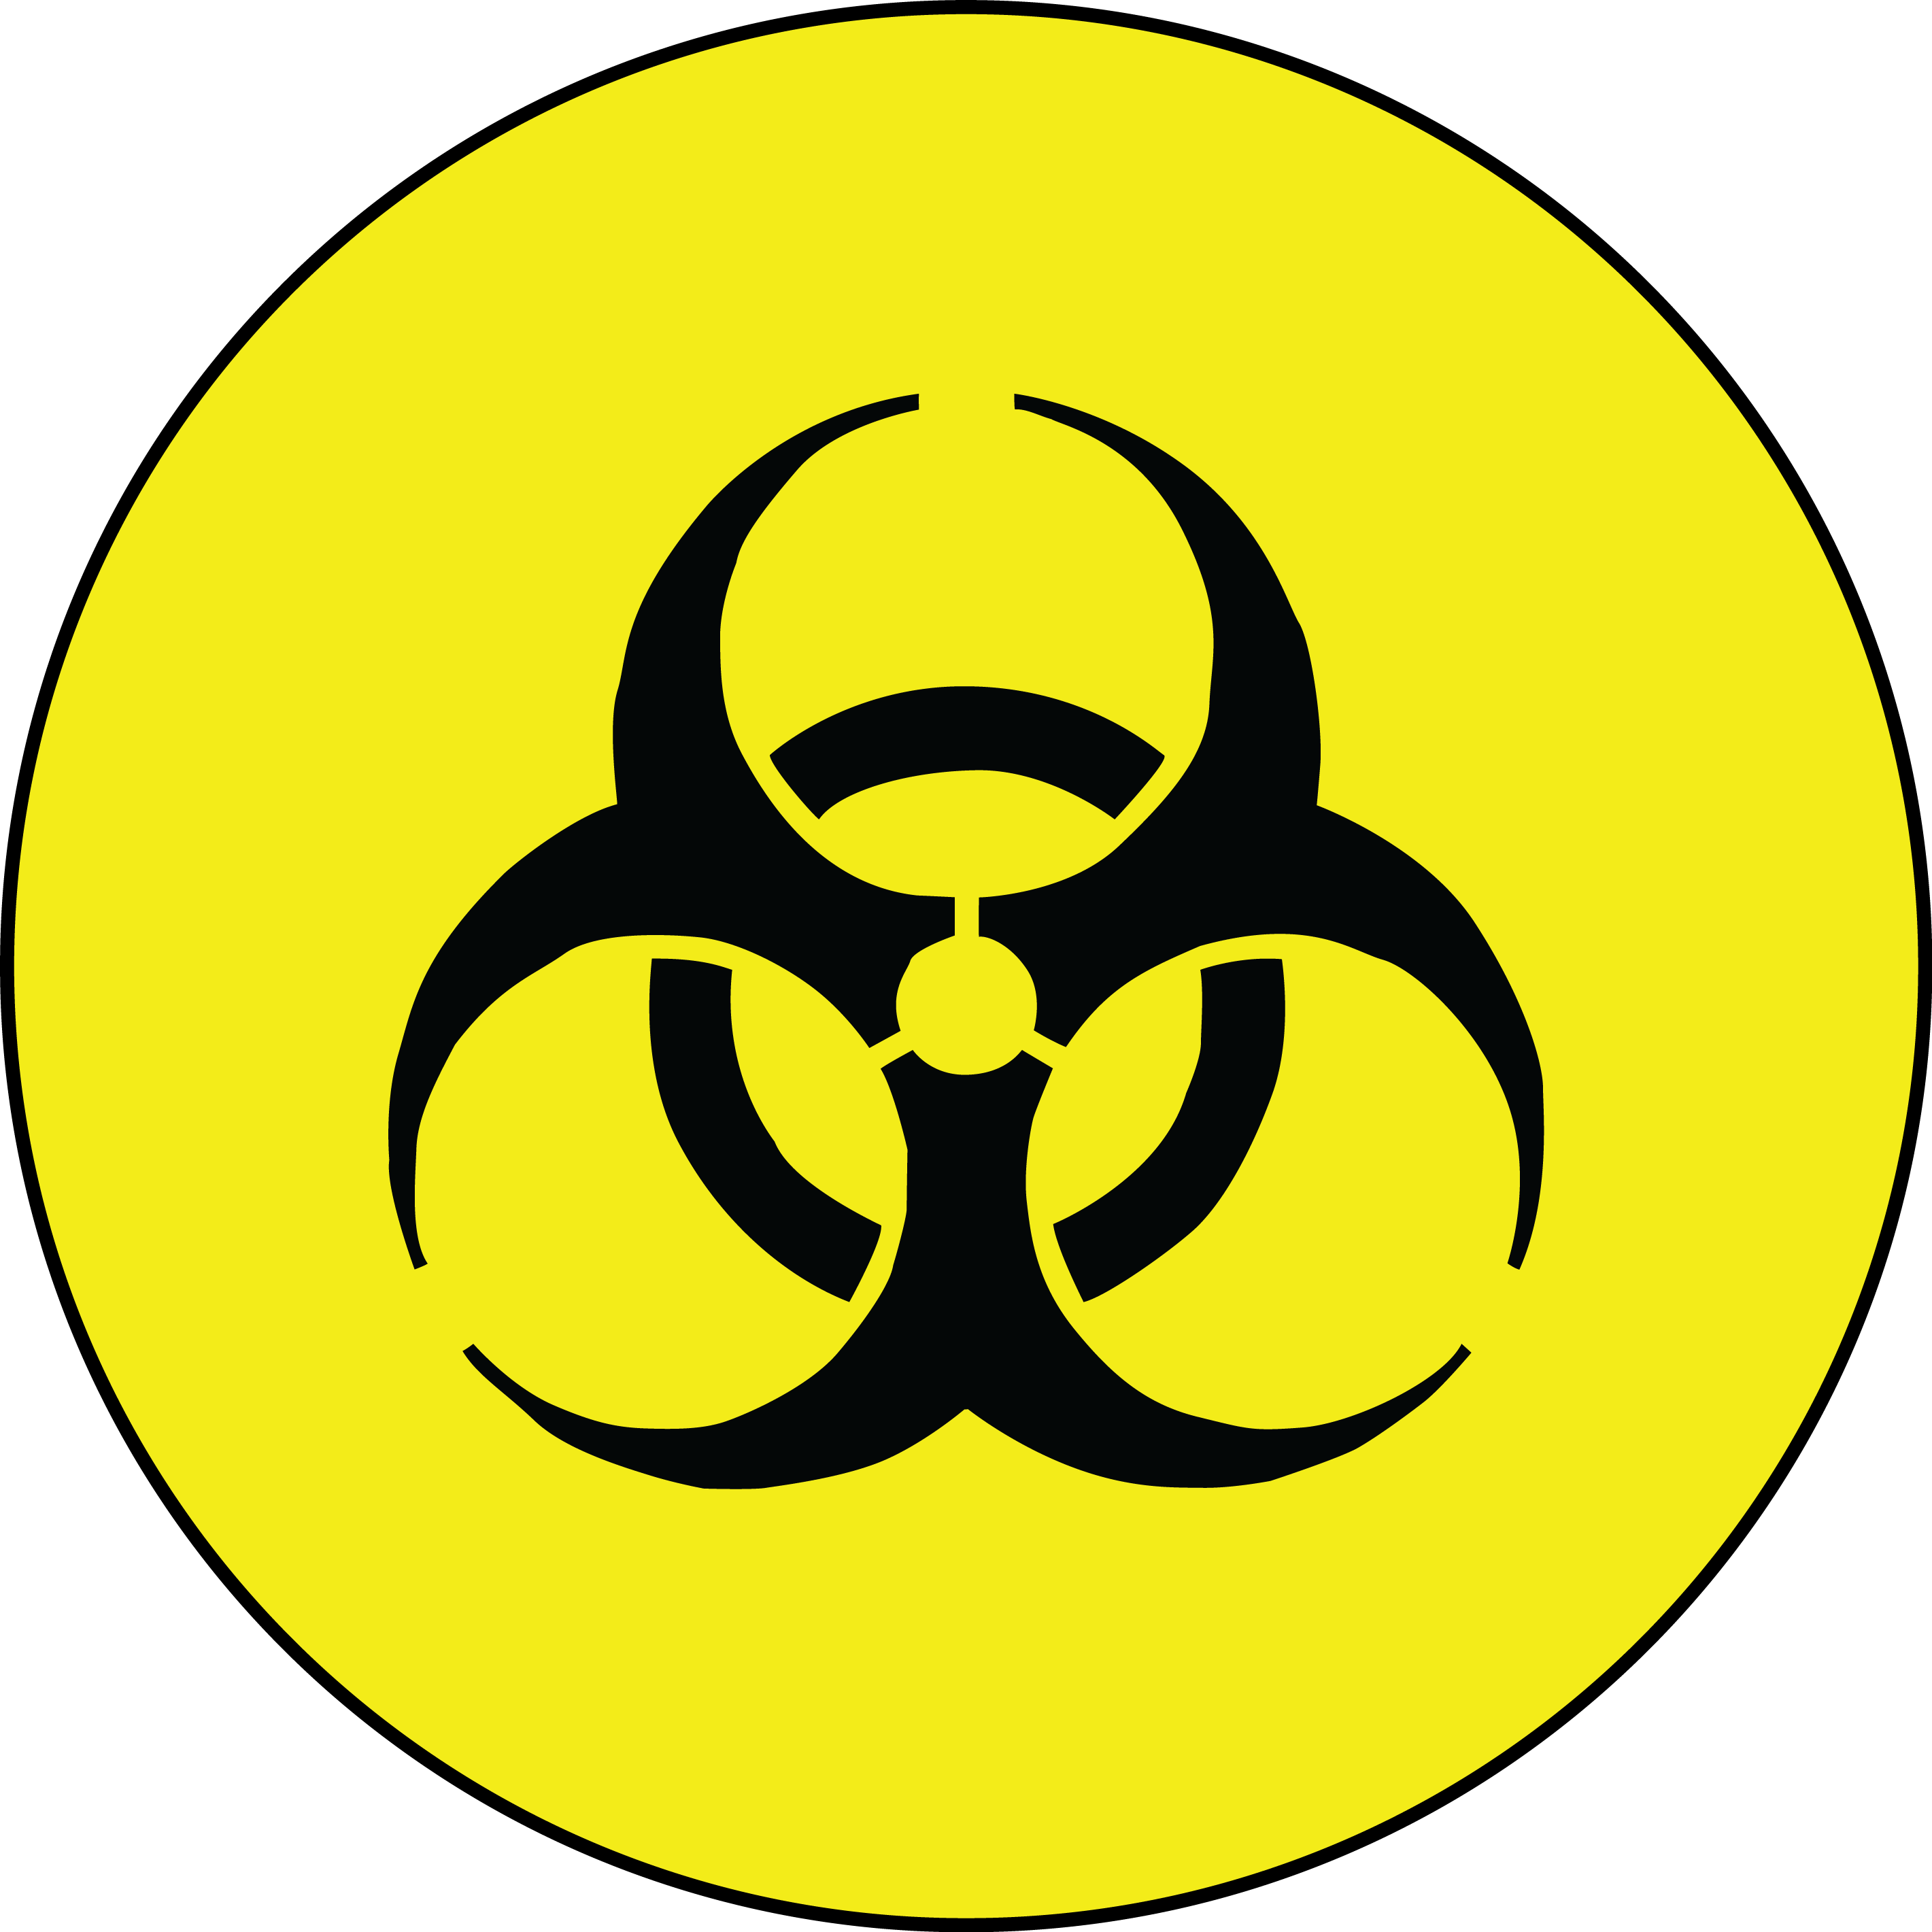 download-biohazard-symbol-free-download-png-hq-png-image-freepngimg